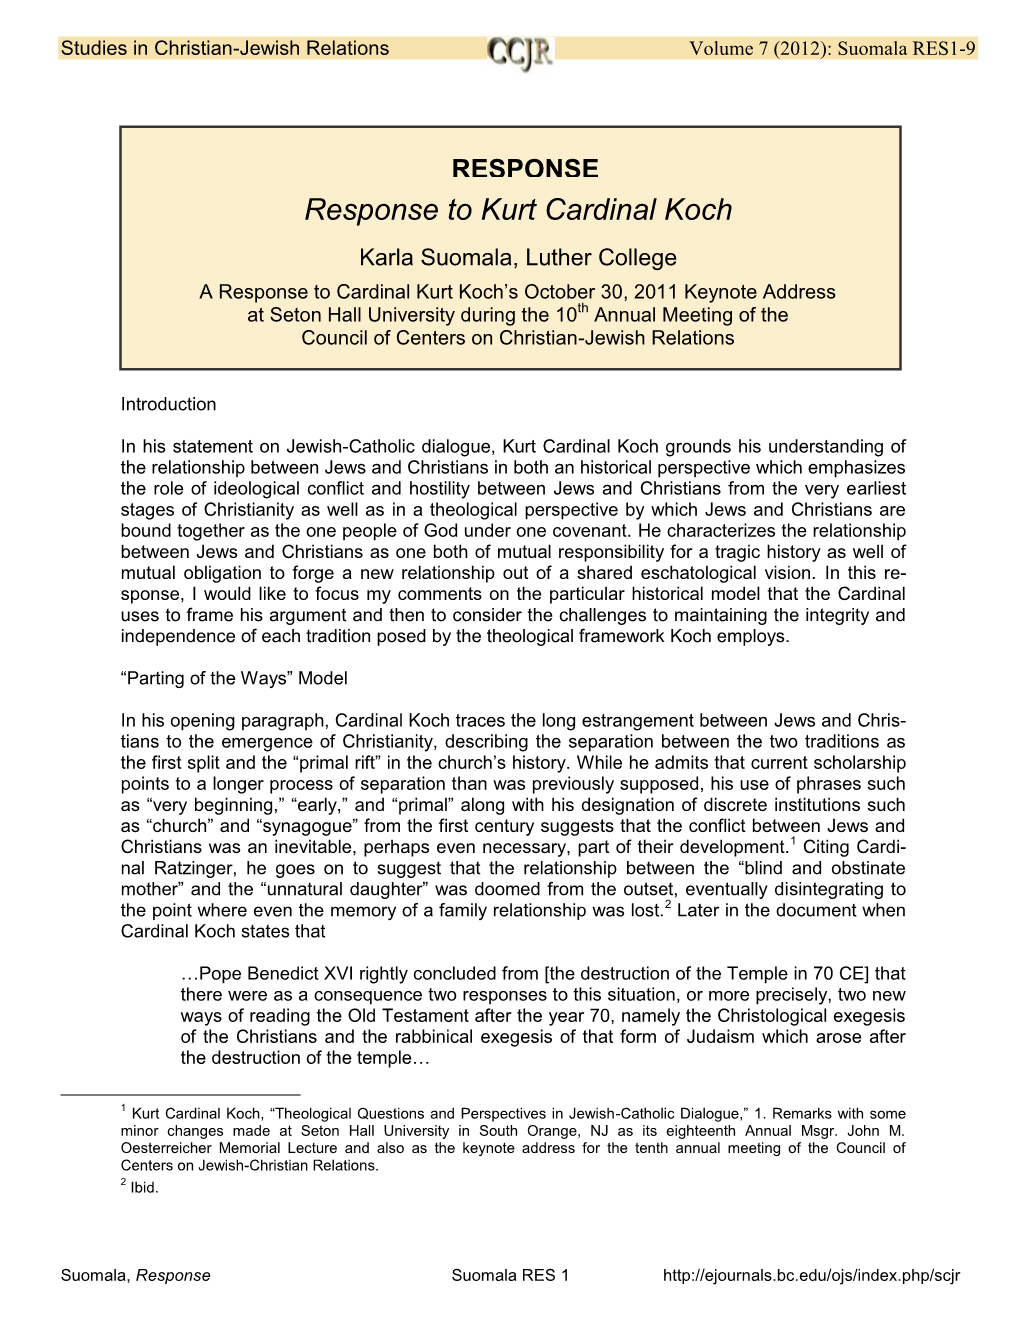 Response to Kurt Cardinal Koch